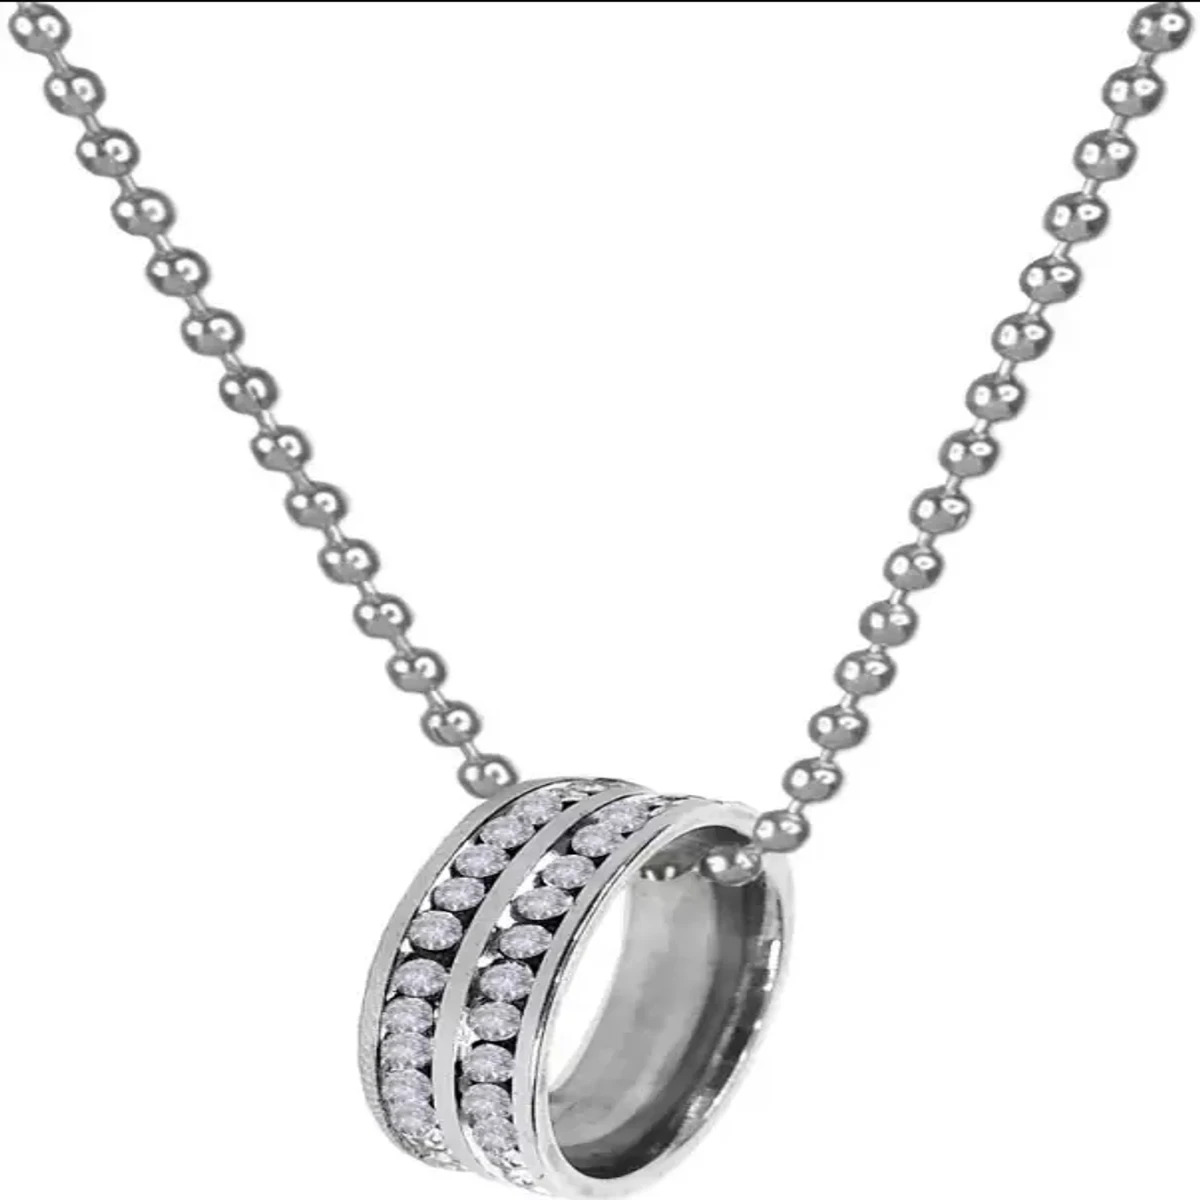 Silver Stylish Chain & Ring Locket For Men